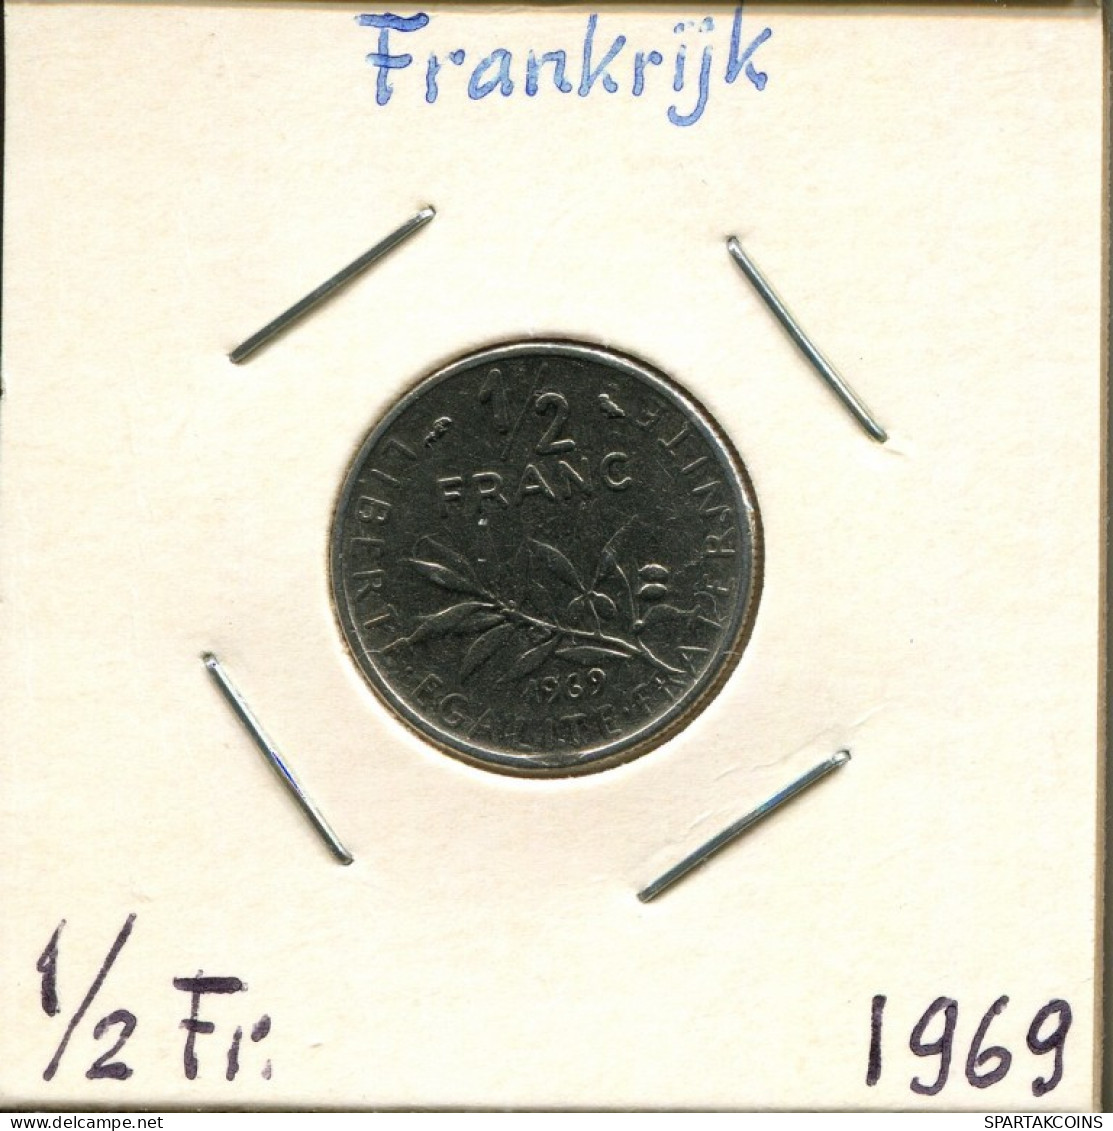 1/2 FRANC 1969 FRANCE Coin French Coin #AM241.U.A - 1/2 Franc